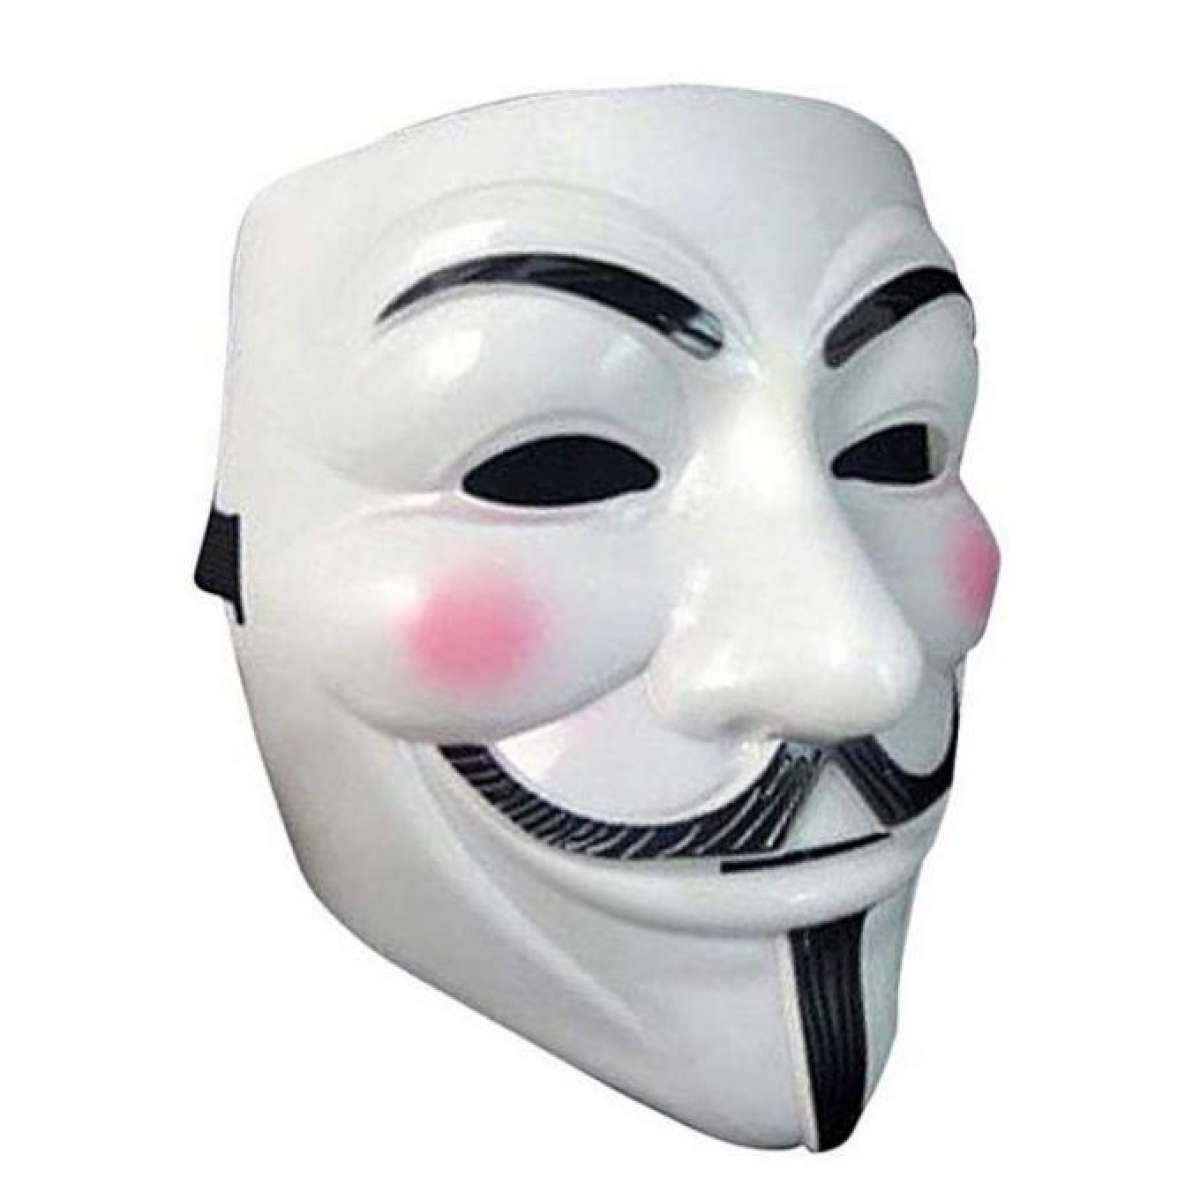 Buy masks. Маска Анонимуса. Маска Анонимуса маска Анонимуса. Анонимус прозрачная маска. Белая маска Анонимуса.